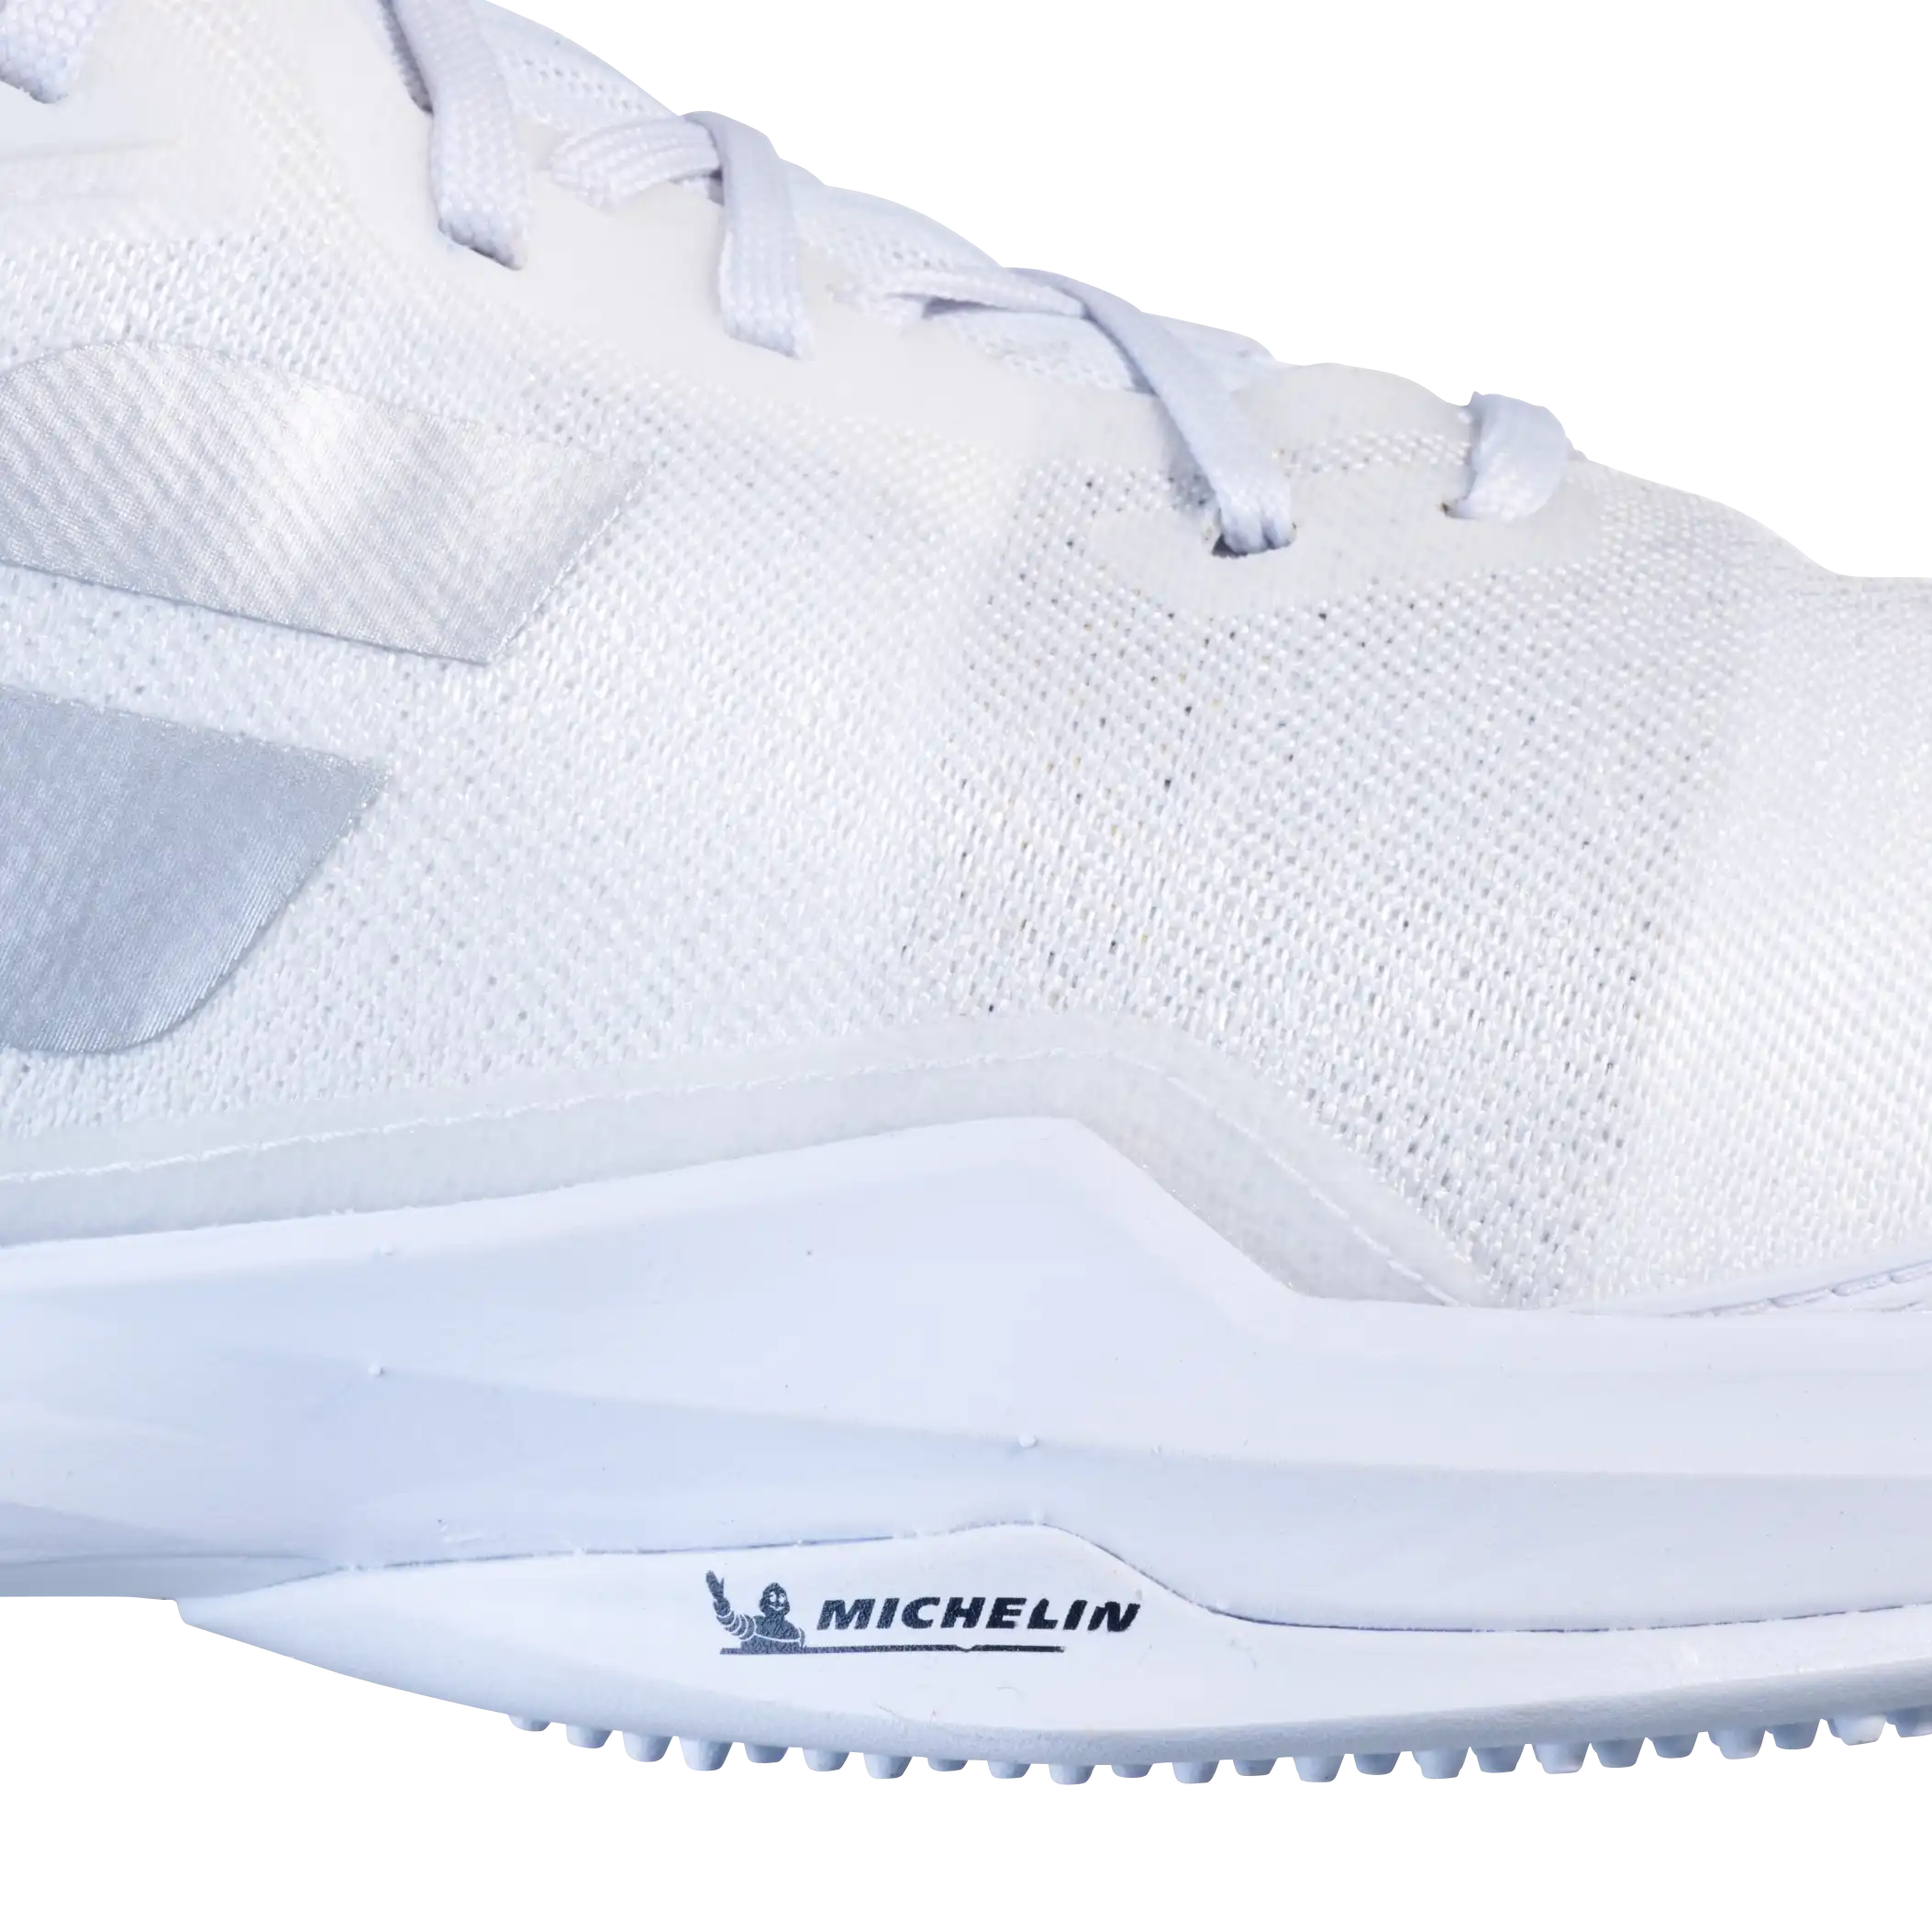 Babolat Women's Jet Mach 3 Grass Wimbledon Tennis Shoe In White/Silver